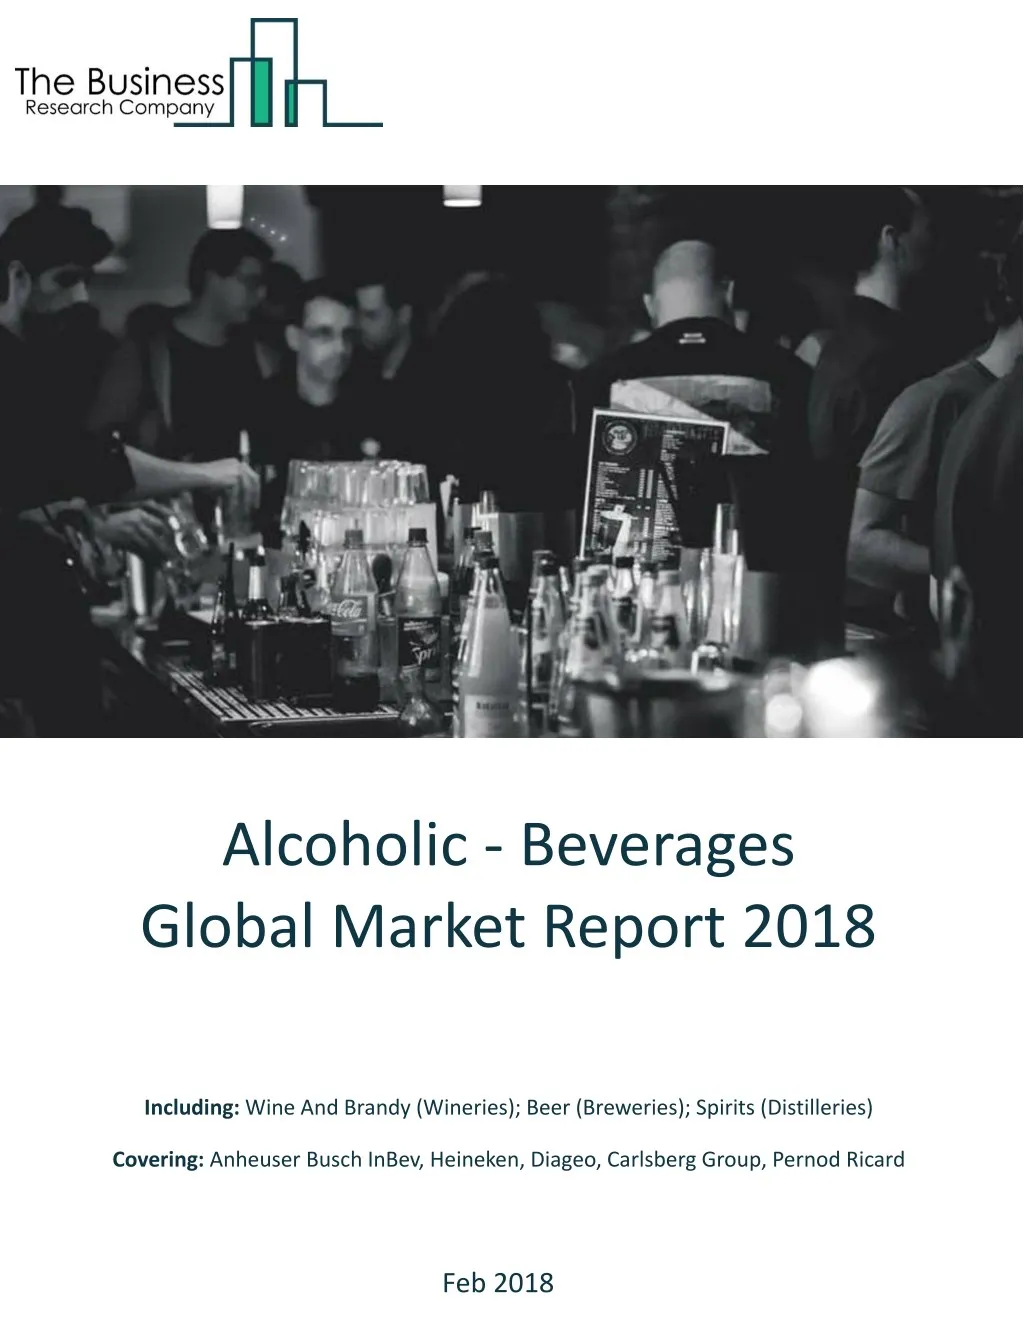 alcoholic beverages global market report 2018